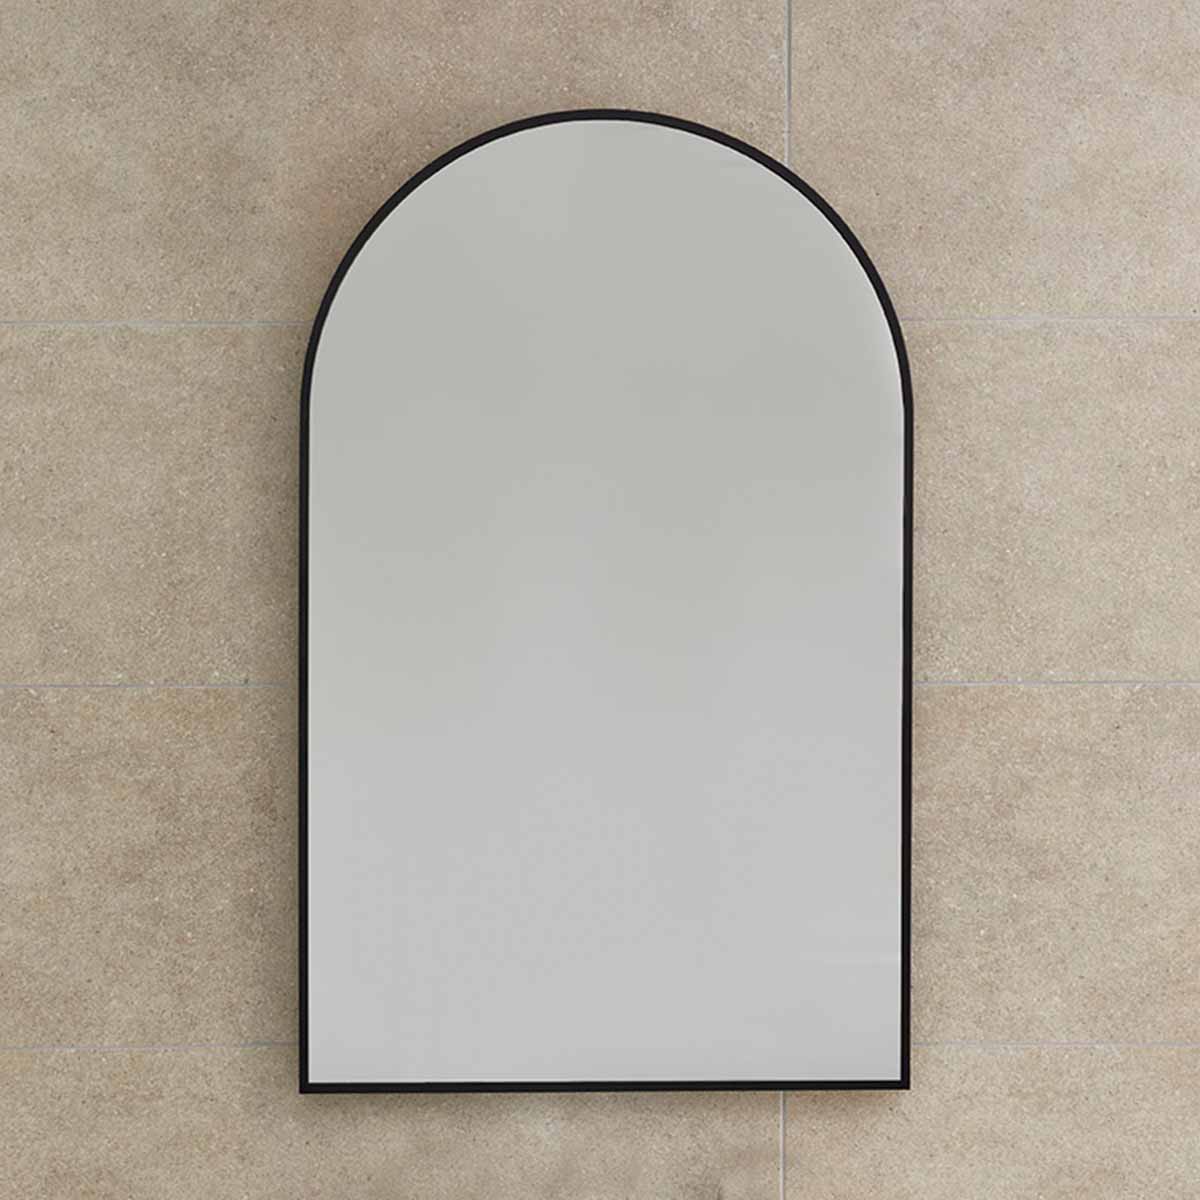 Harbour Arch Mirror Matt Black 50x80cm lifestyle deluxe bathrooms ireland